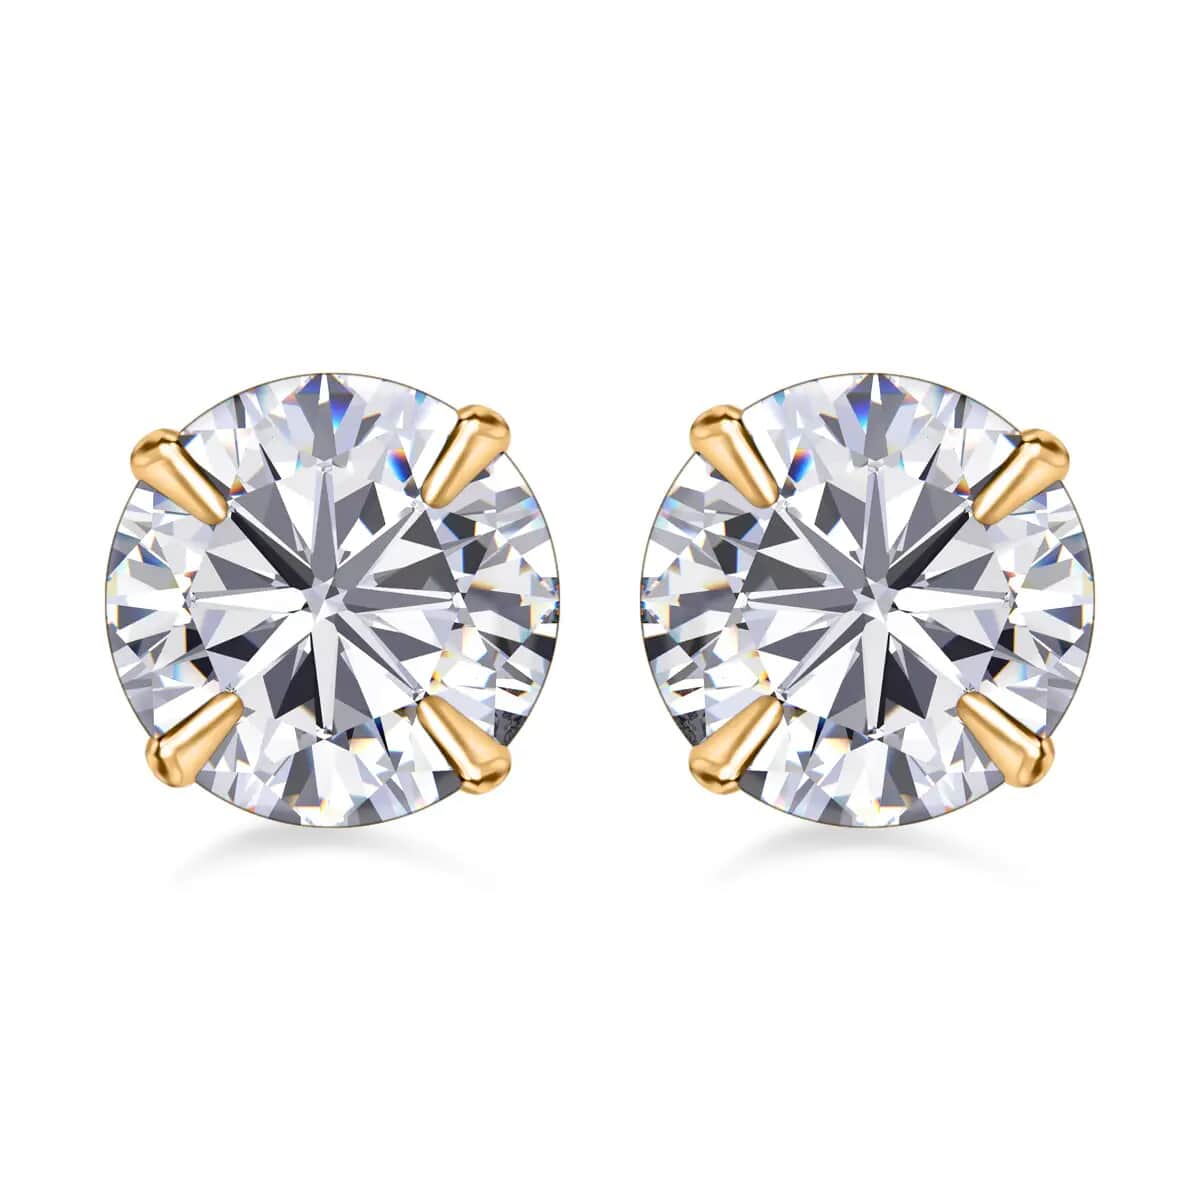 Buy 14K Yellow Gold Crystal Stud Earrings| Crystal Studs